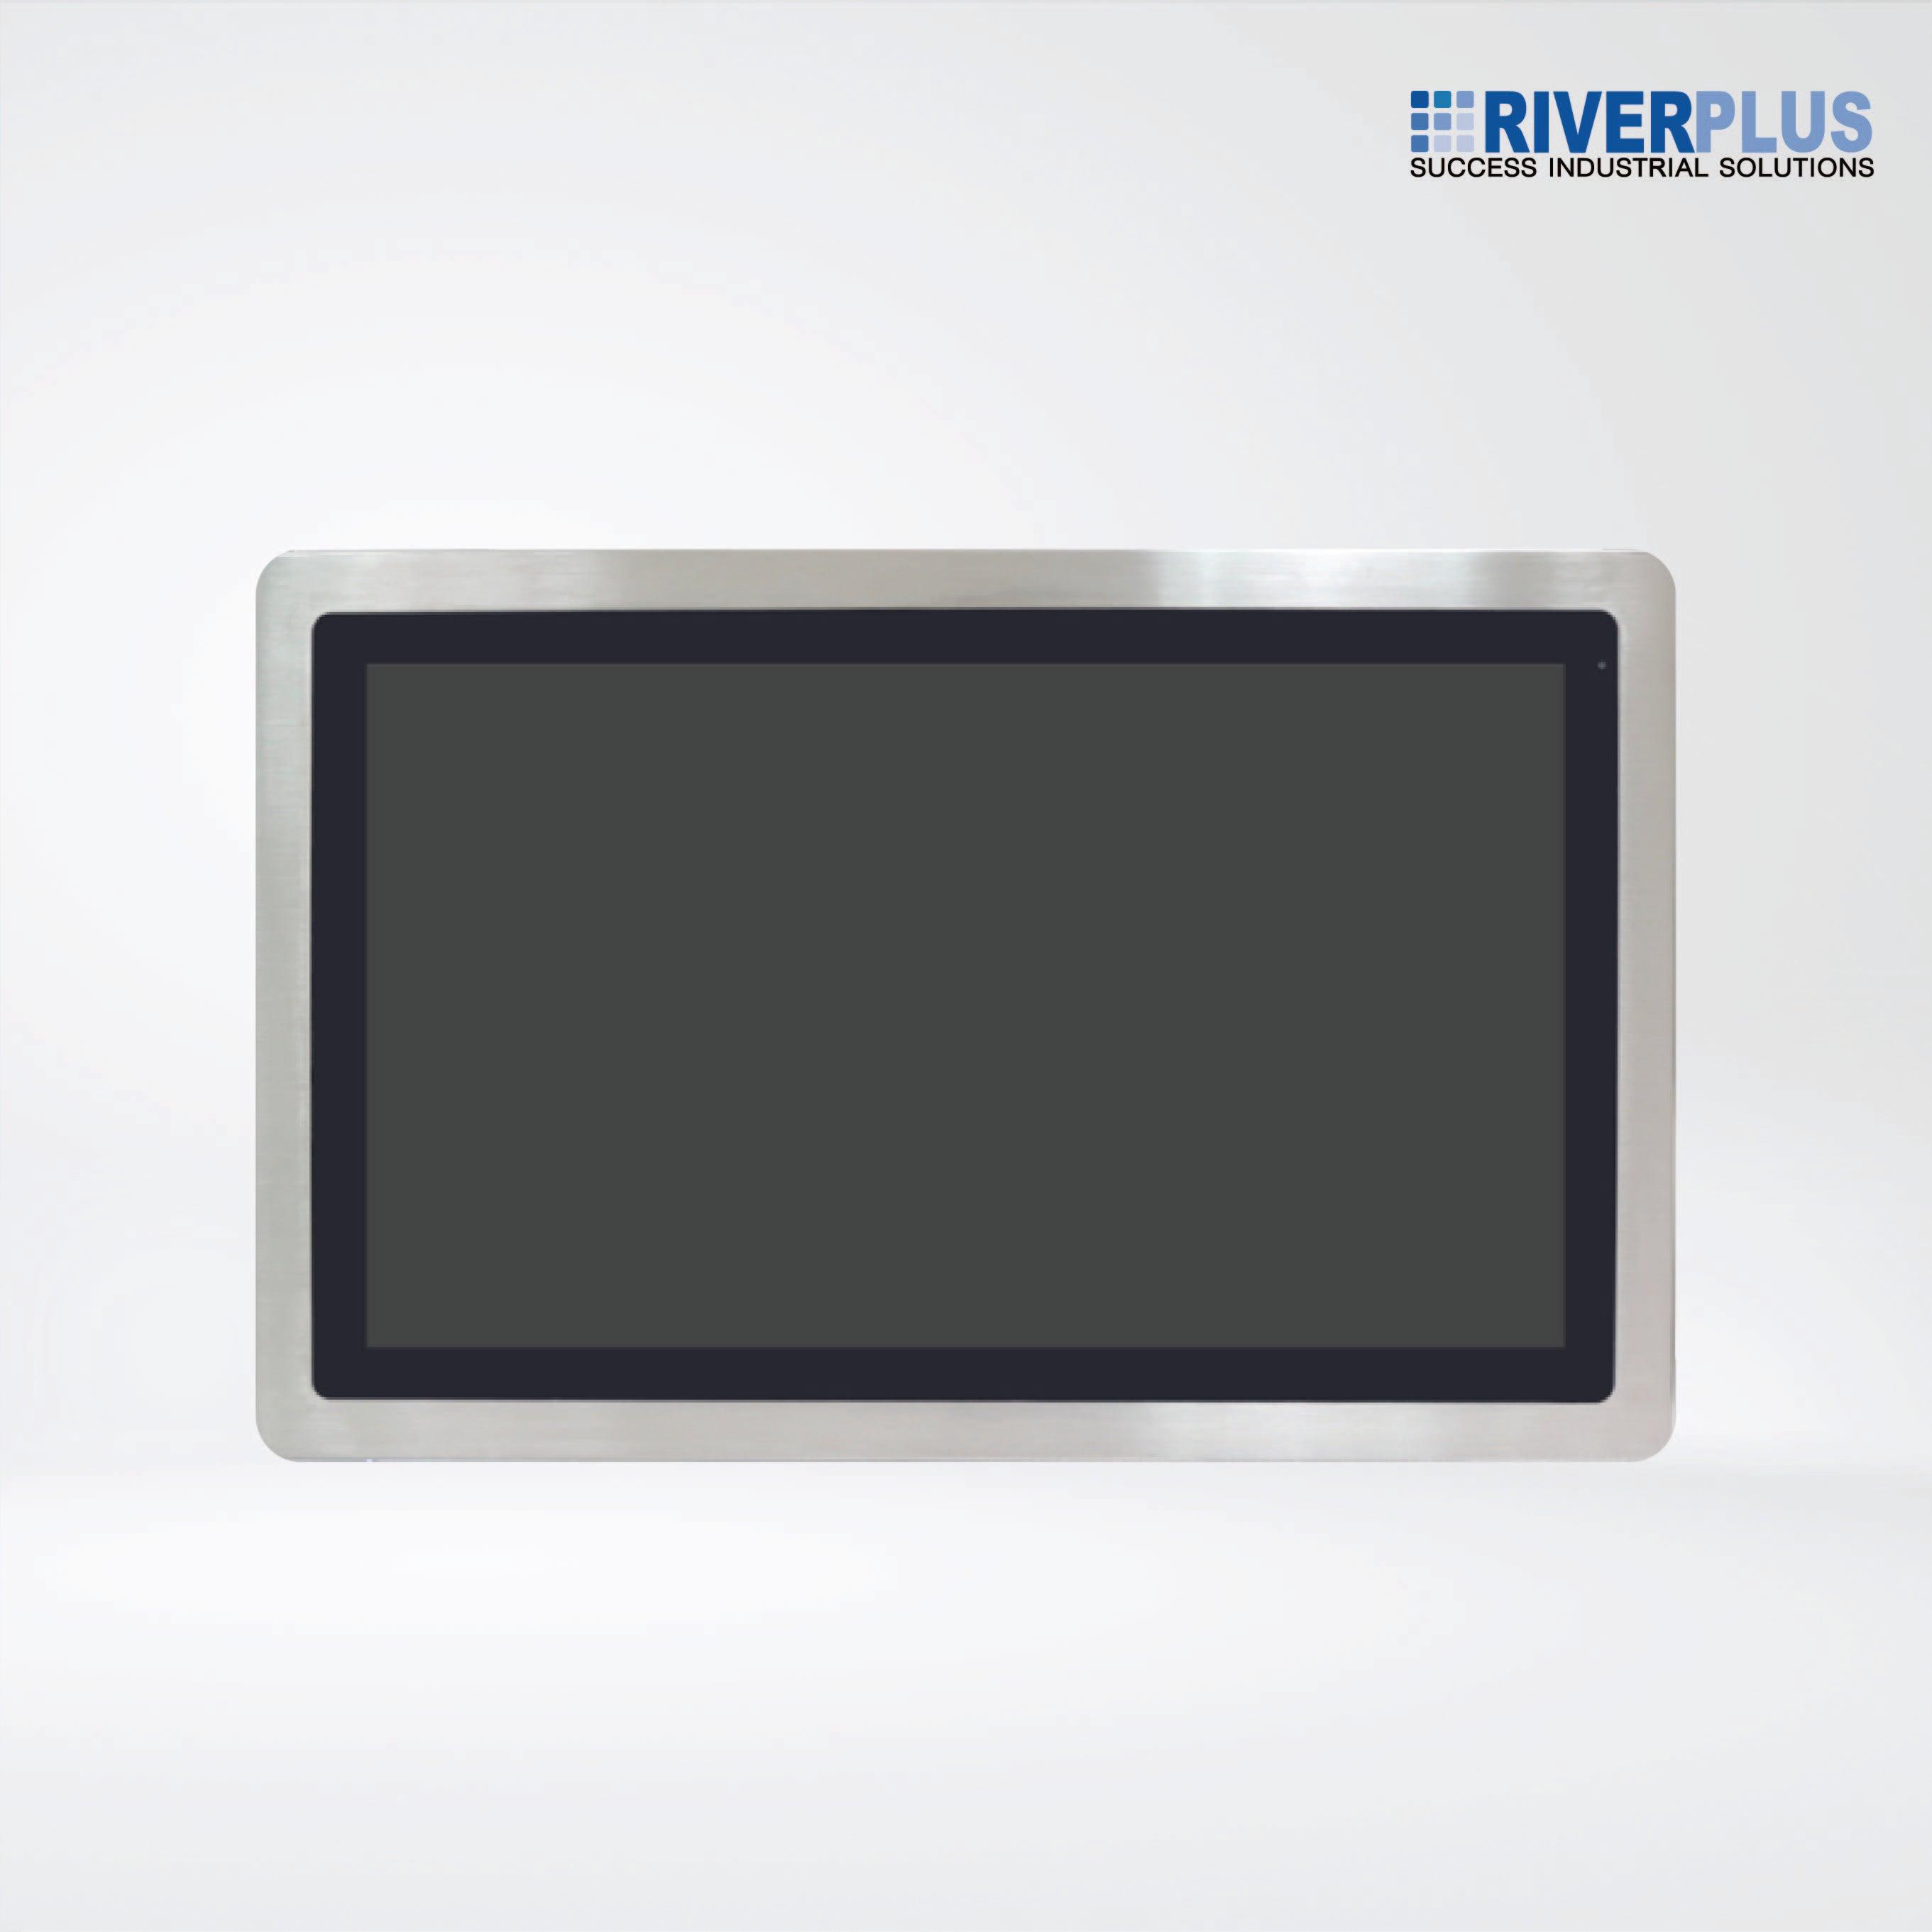 ViTAM-921AR 21.5″ New Gen. IP66/IP69K Stainless Steel Panel PC - Riverplus